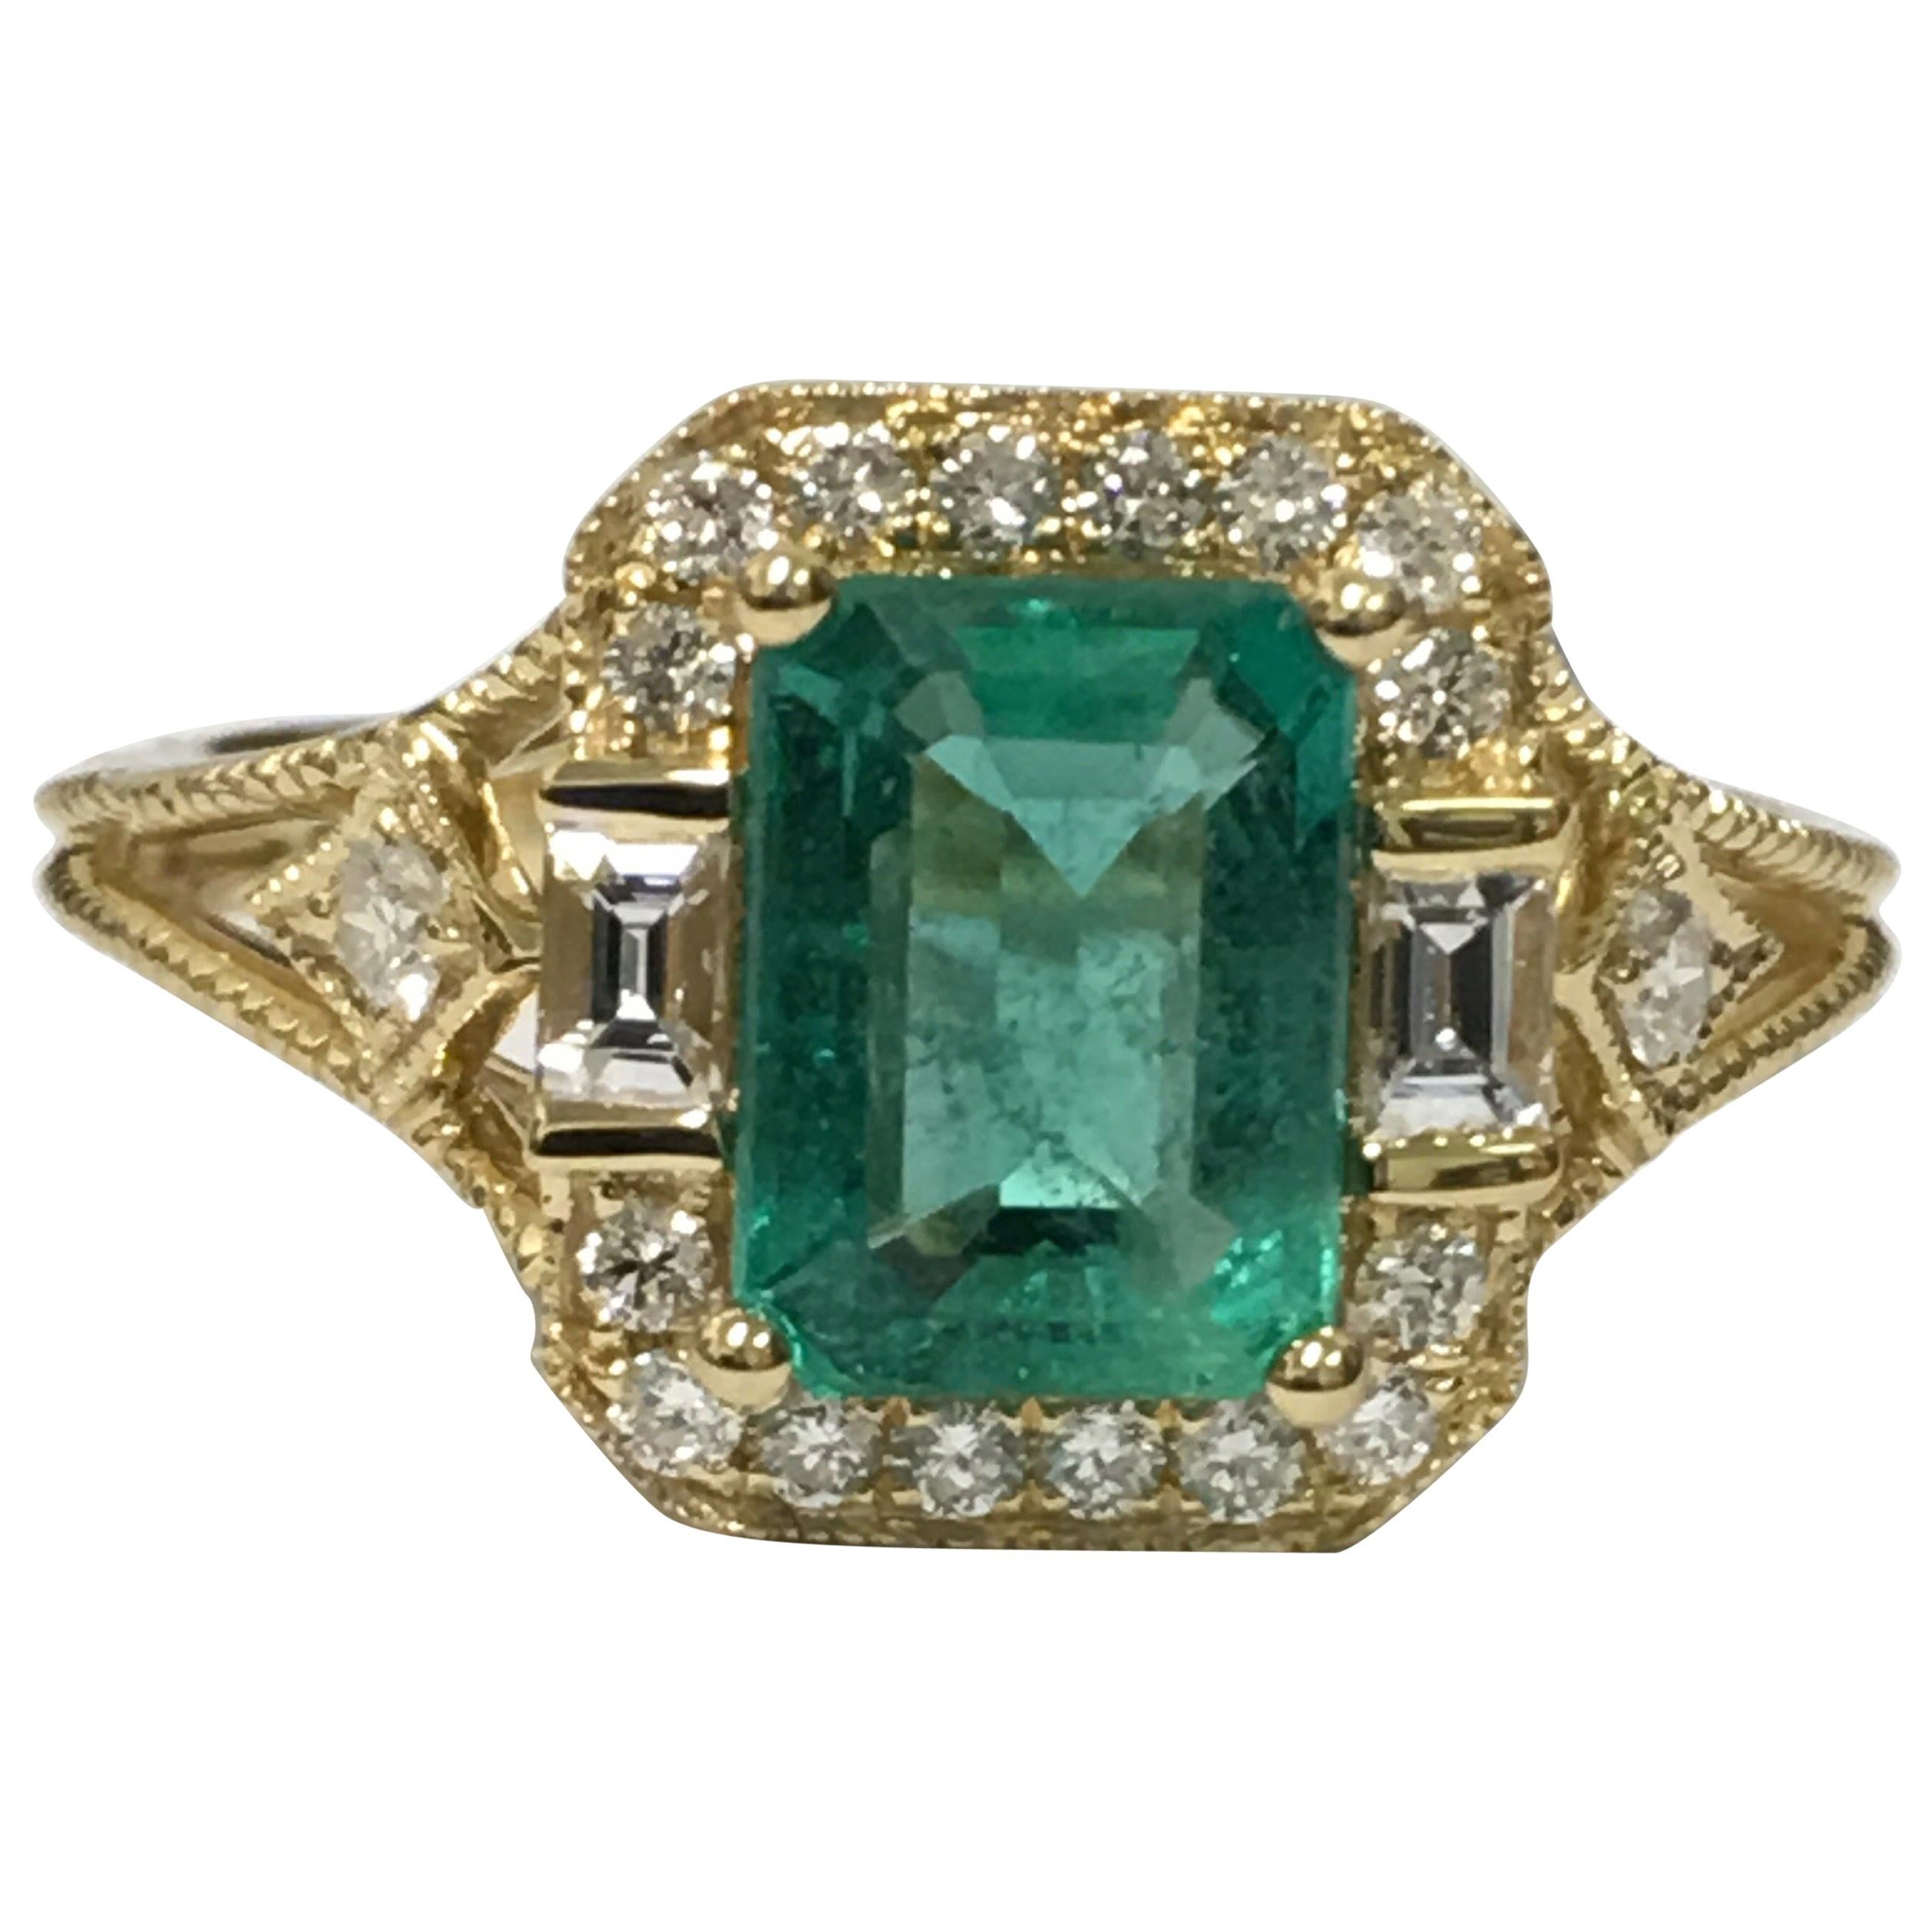 Emerald Diamond Ring Set in 18 Karat Yellow Gold